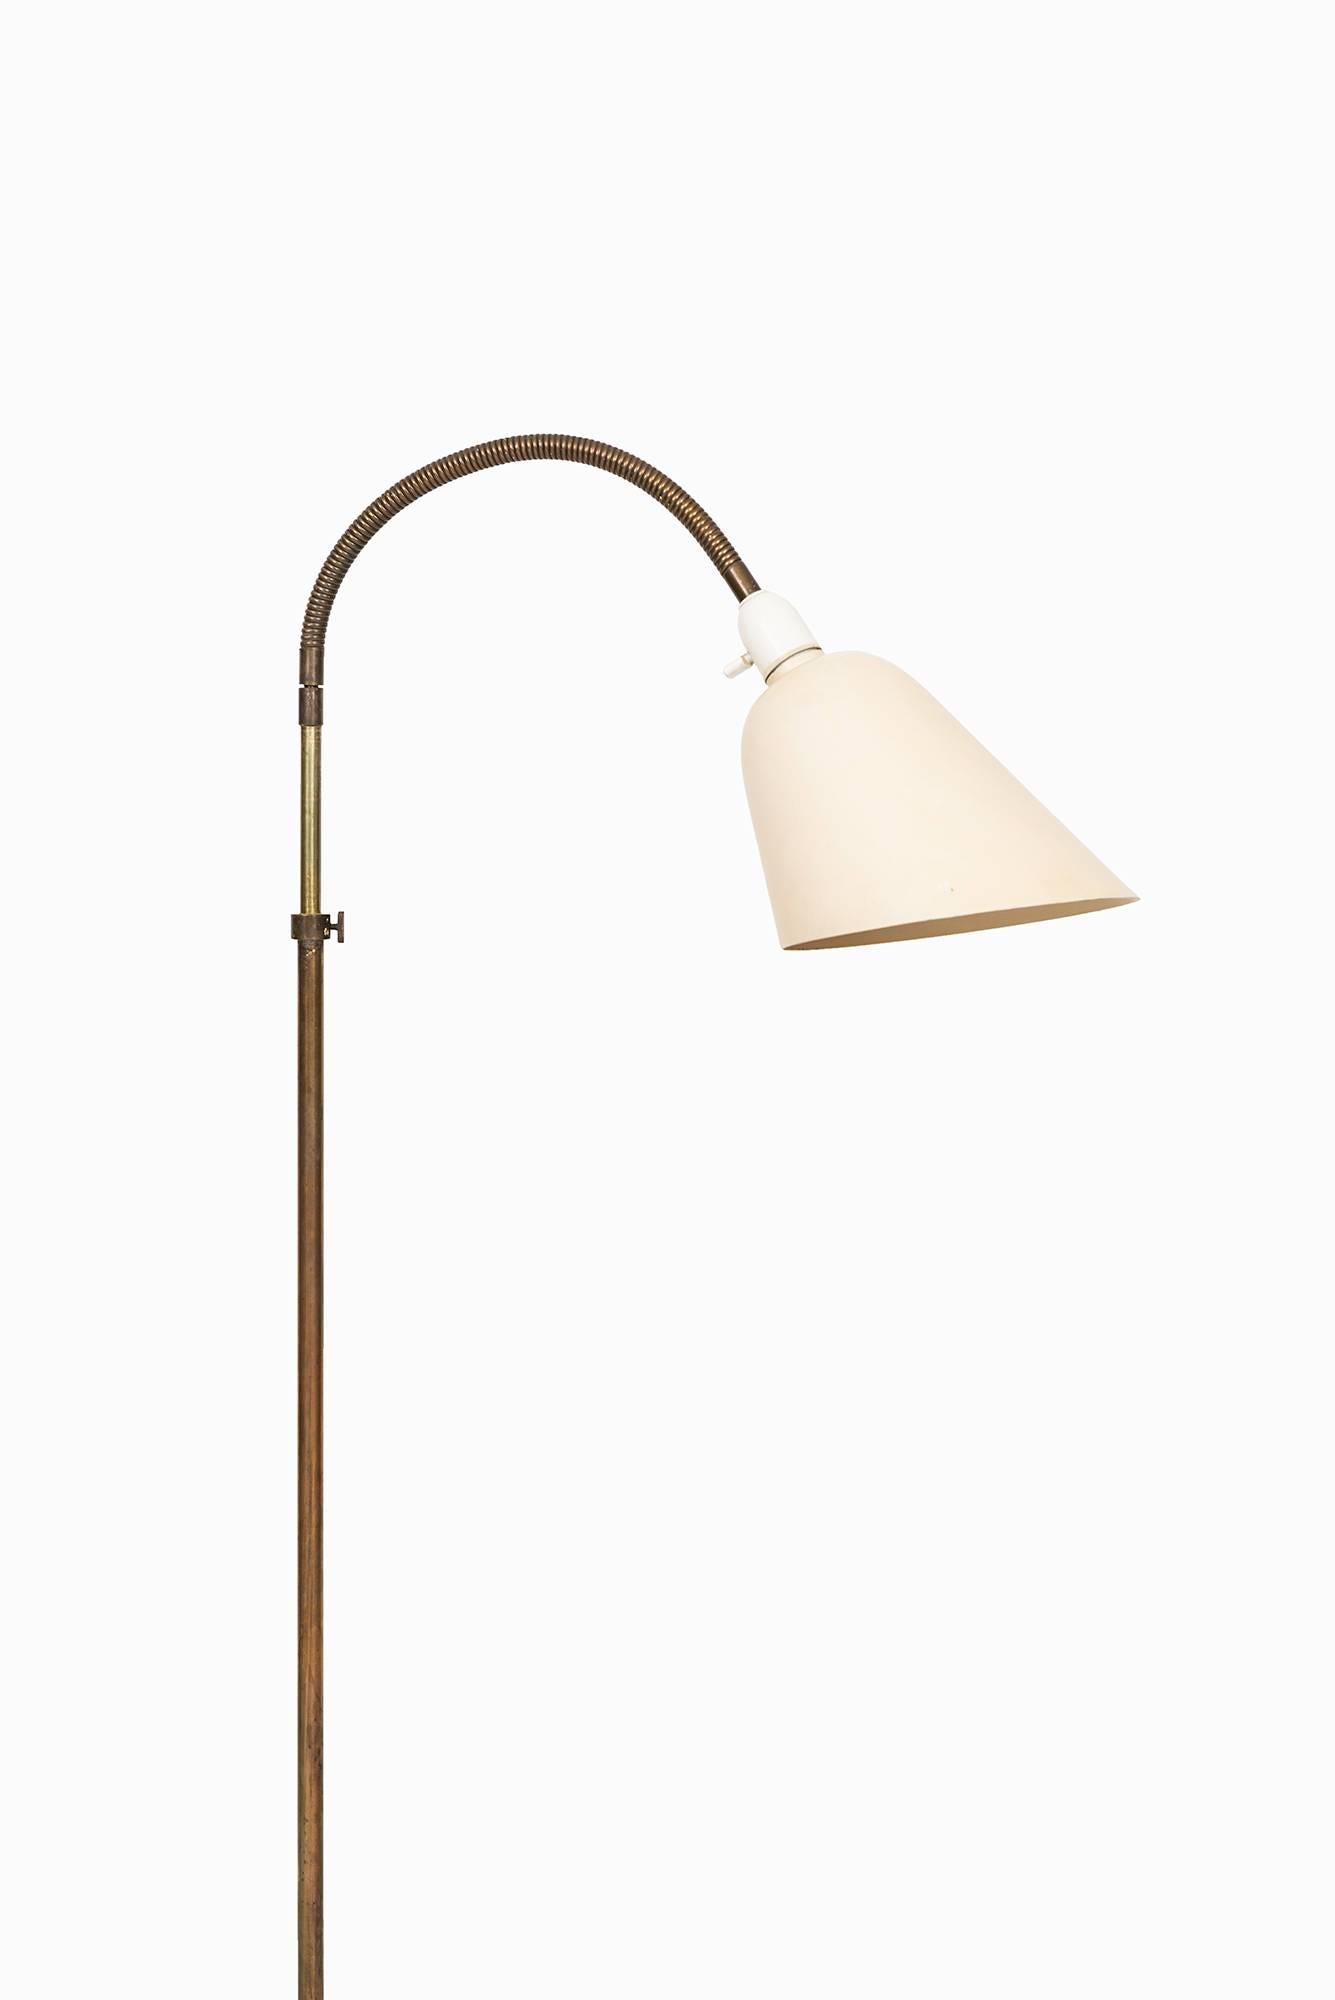 Rare early floor lamp designed by Arne Jacobsen. Produced by Louis Poulsen in Denmark.